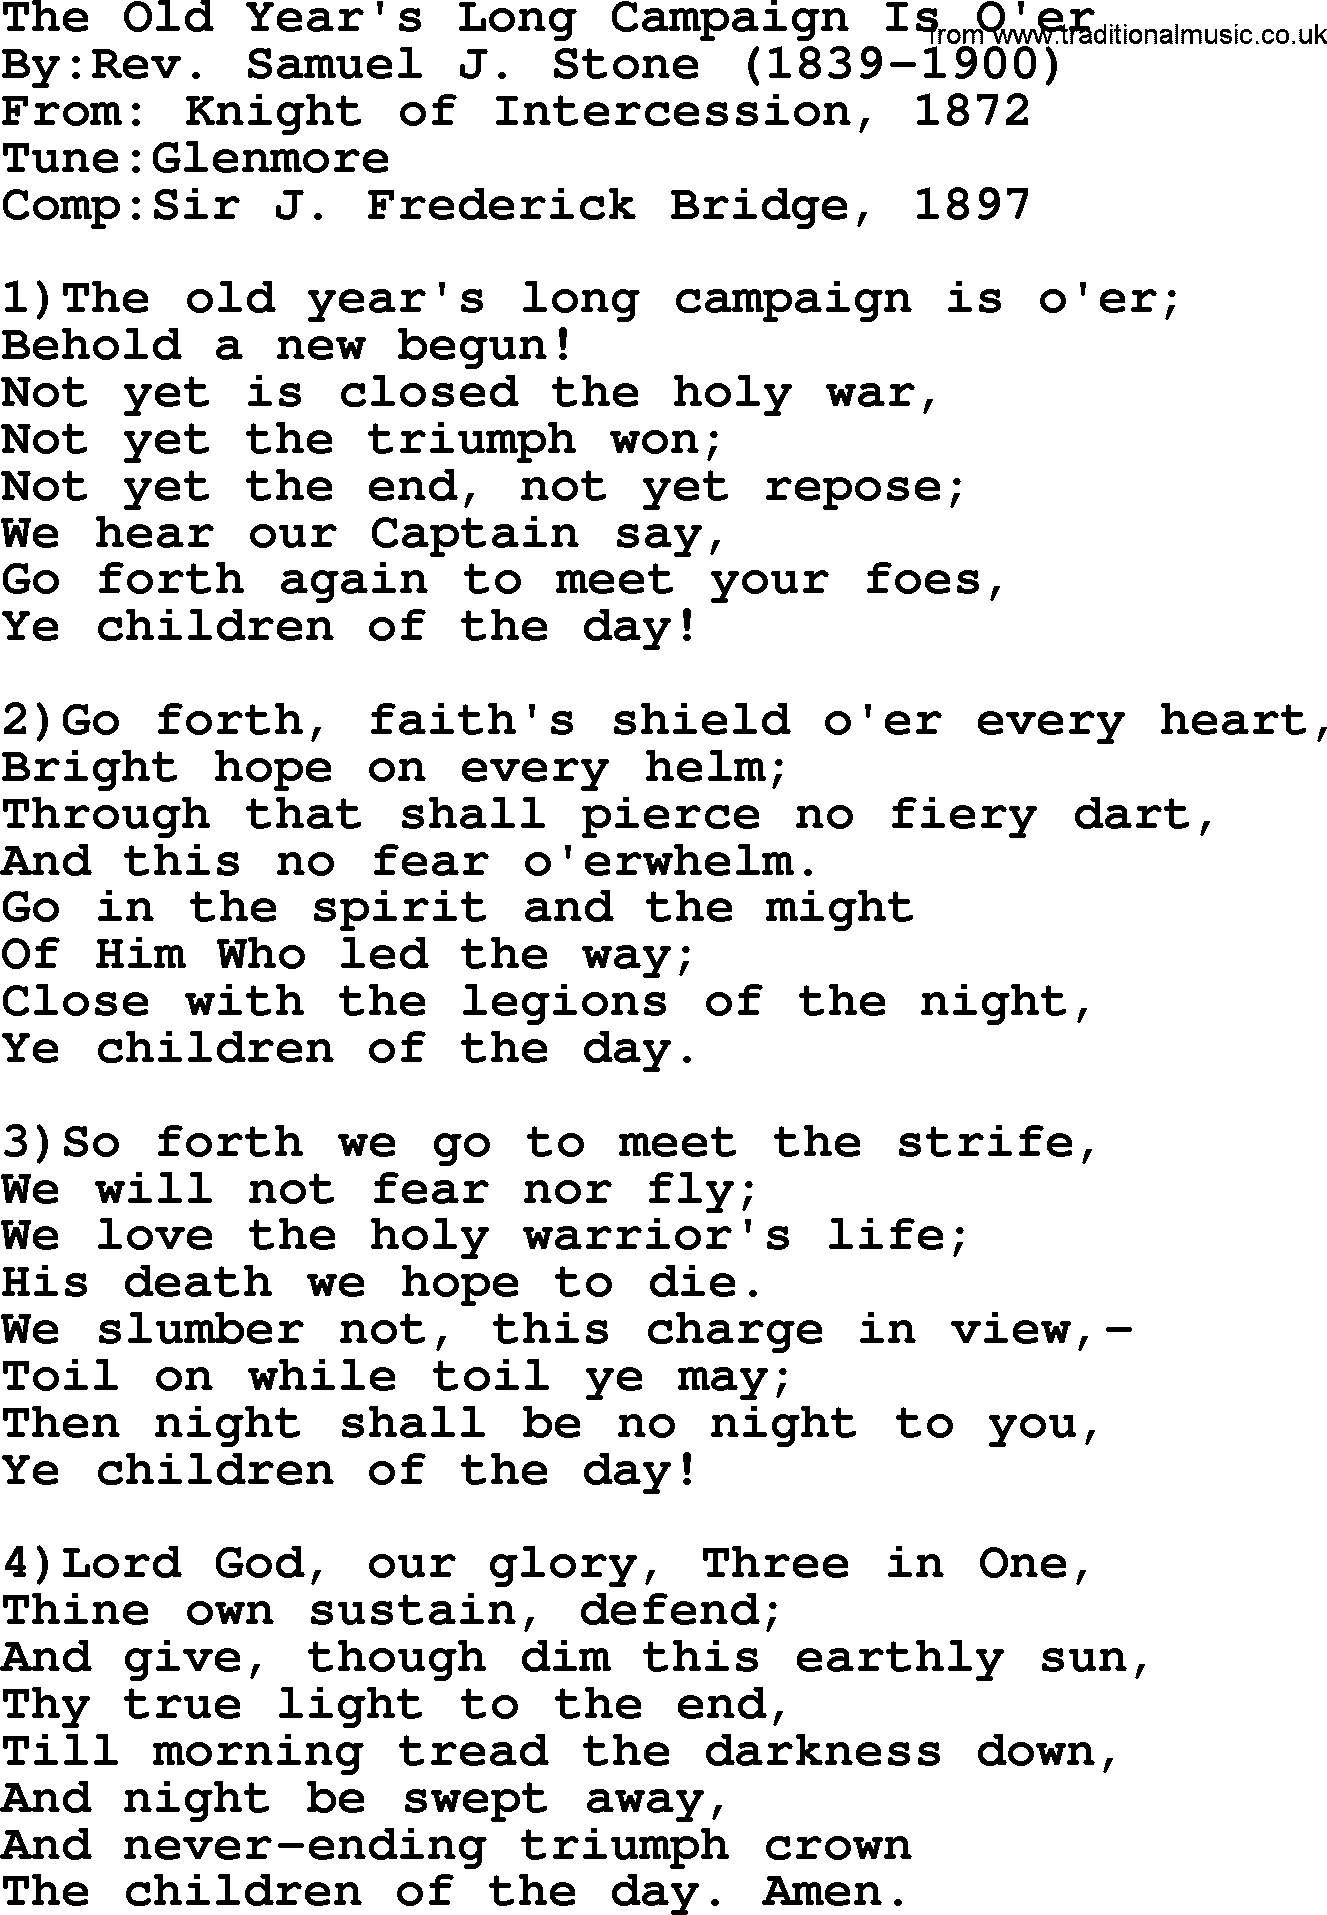 Methodist Hymn: The Old Year's Long Campaign Is O'er, lyrics